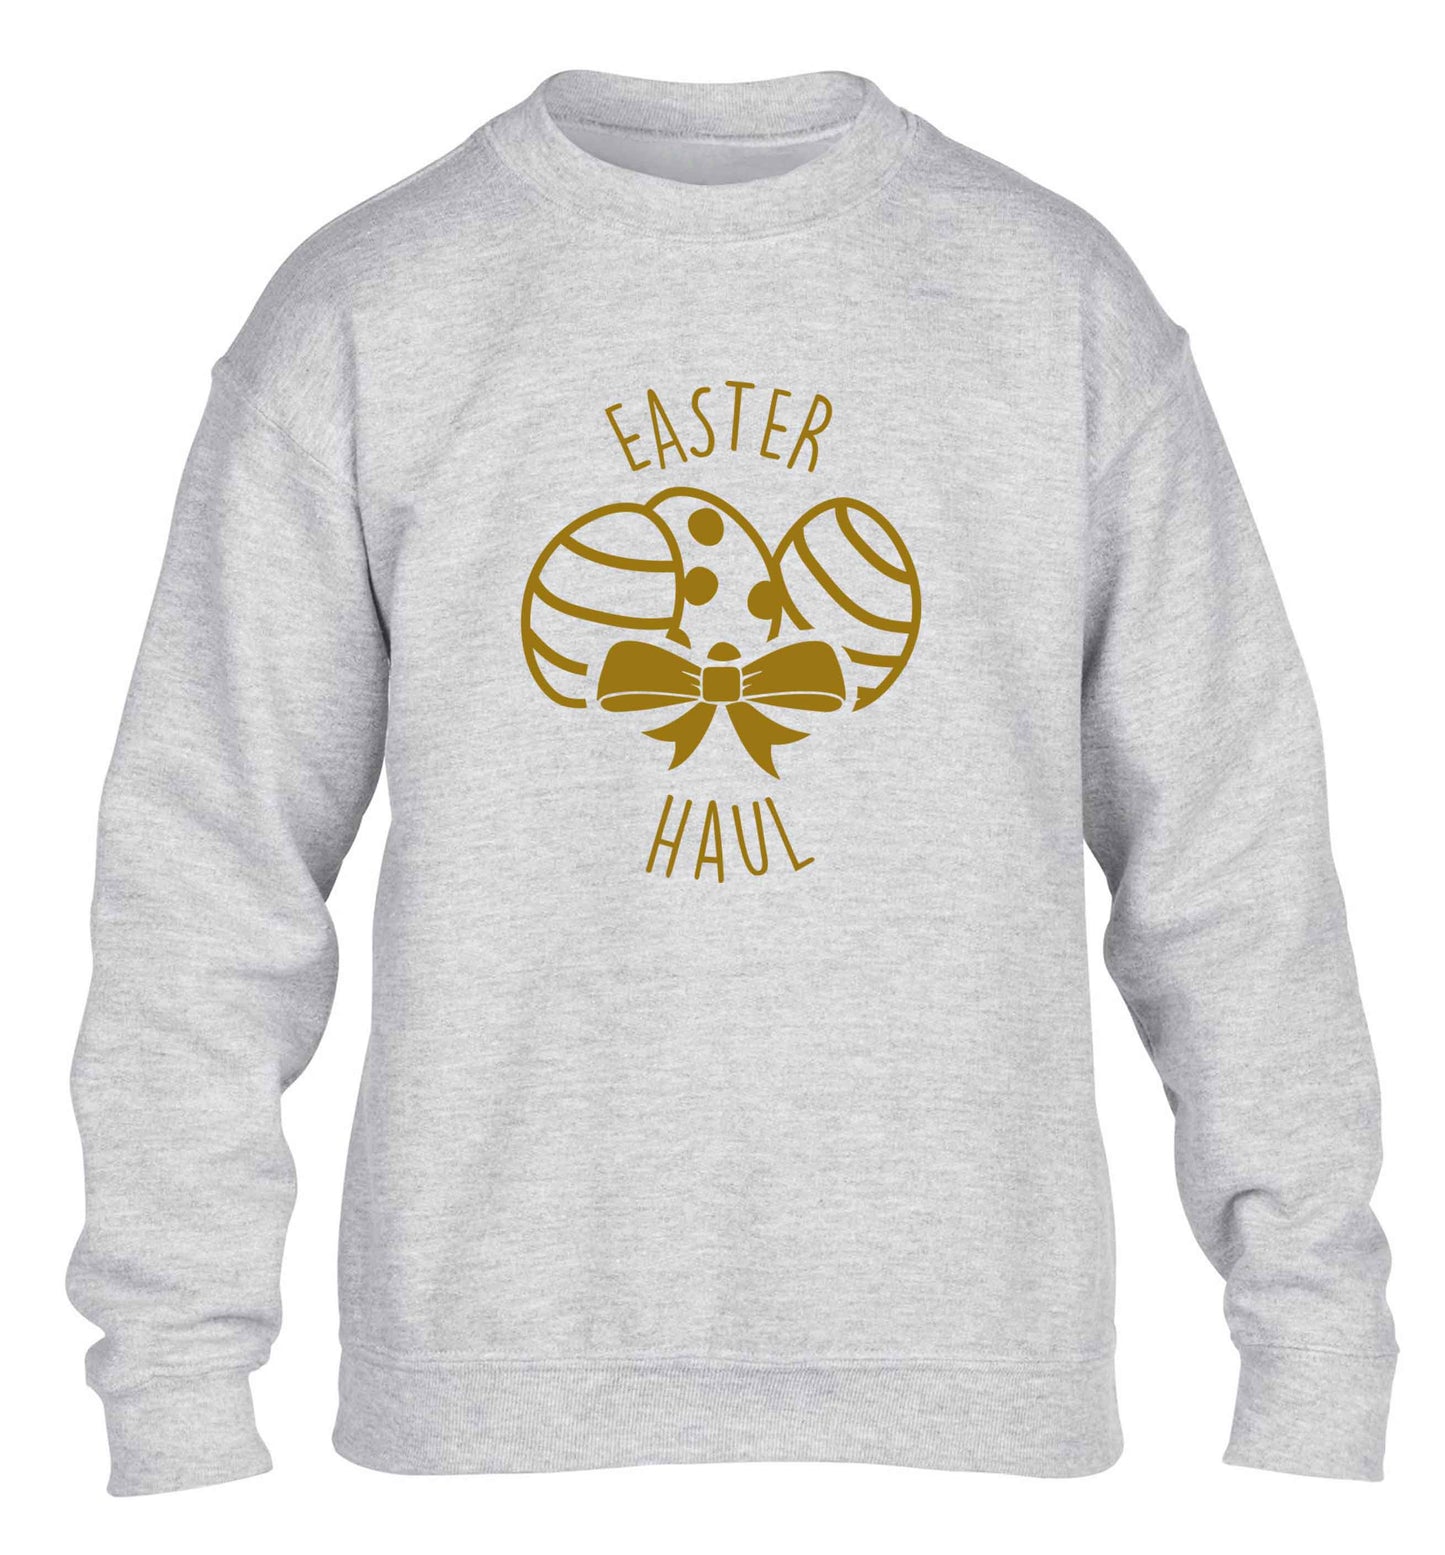 Easter haul children's grey sweater 12-13 Years